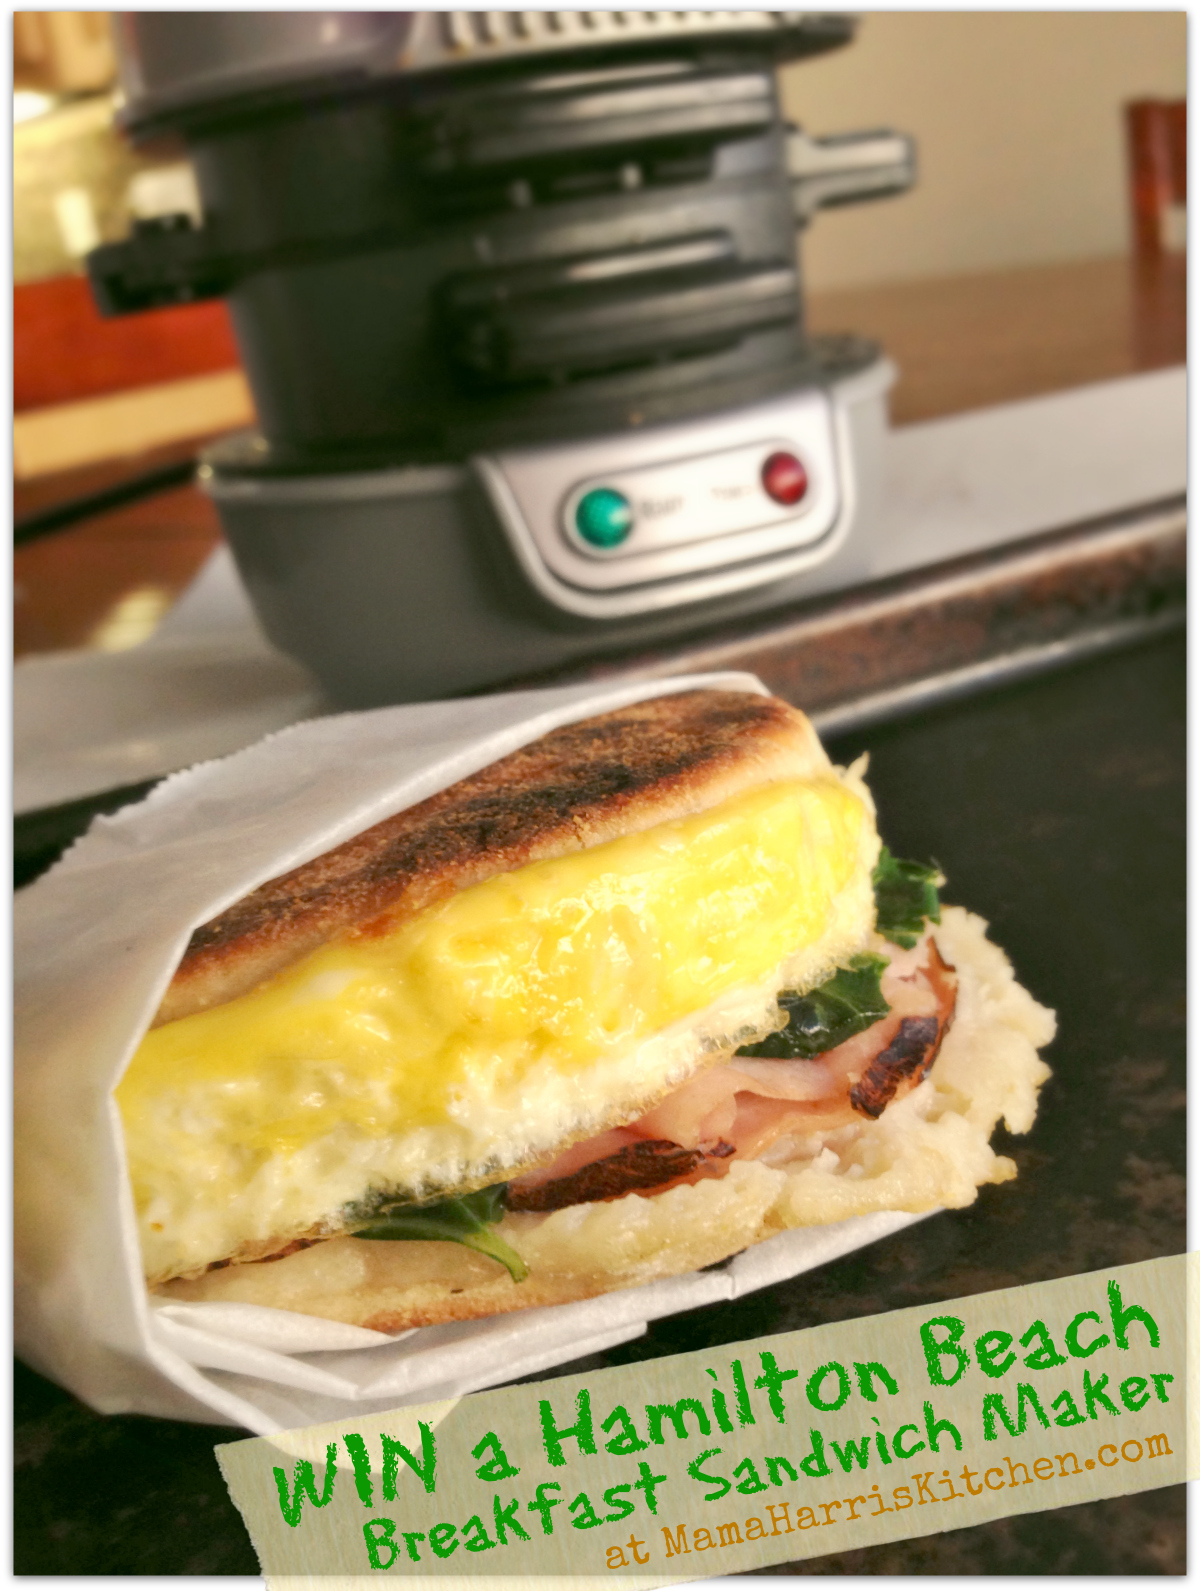 http://3.bp.blogspot.com/-W3oRijsvz4c/UivEDCMYwUI/AAAAAAAAGHY/AaH005HZHUs/s1600/hamilton+beach+giveaway+spinach+ham+pepper+jack+cheese+breakfast+sandwich+19.1.jpg